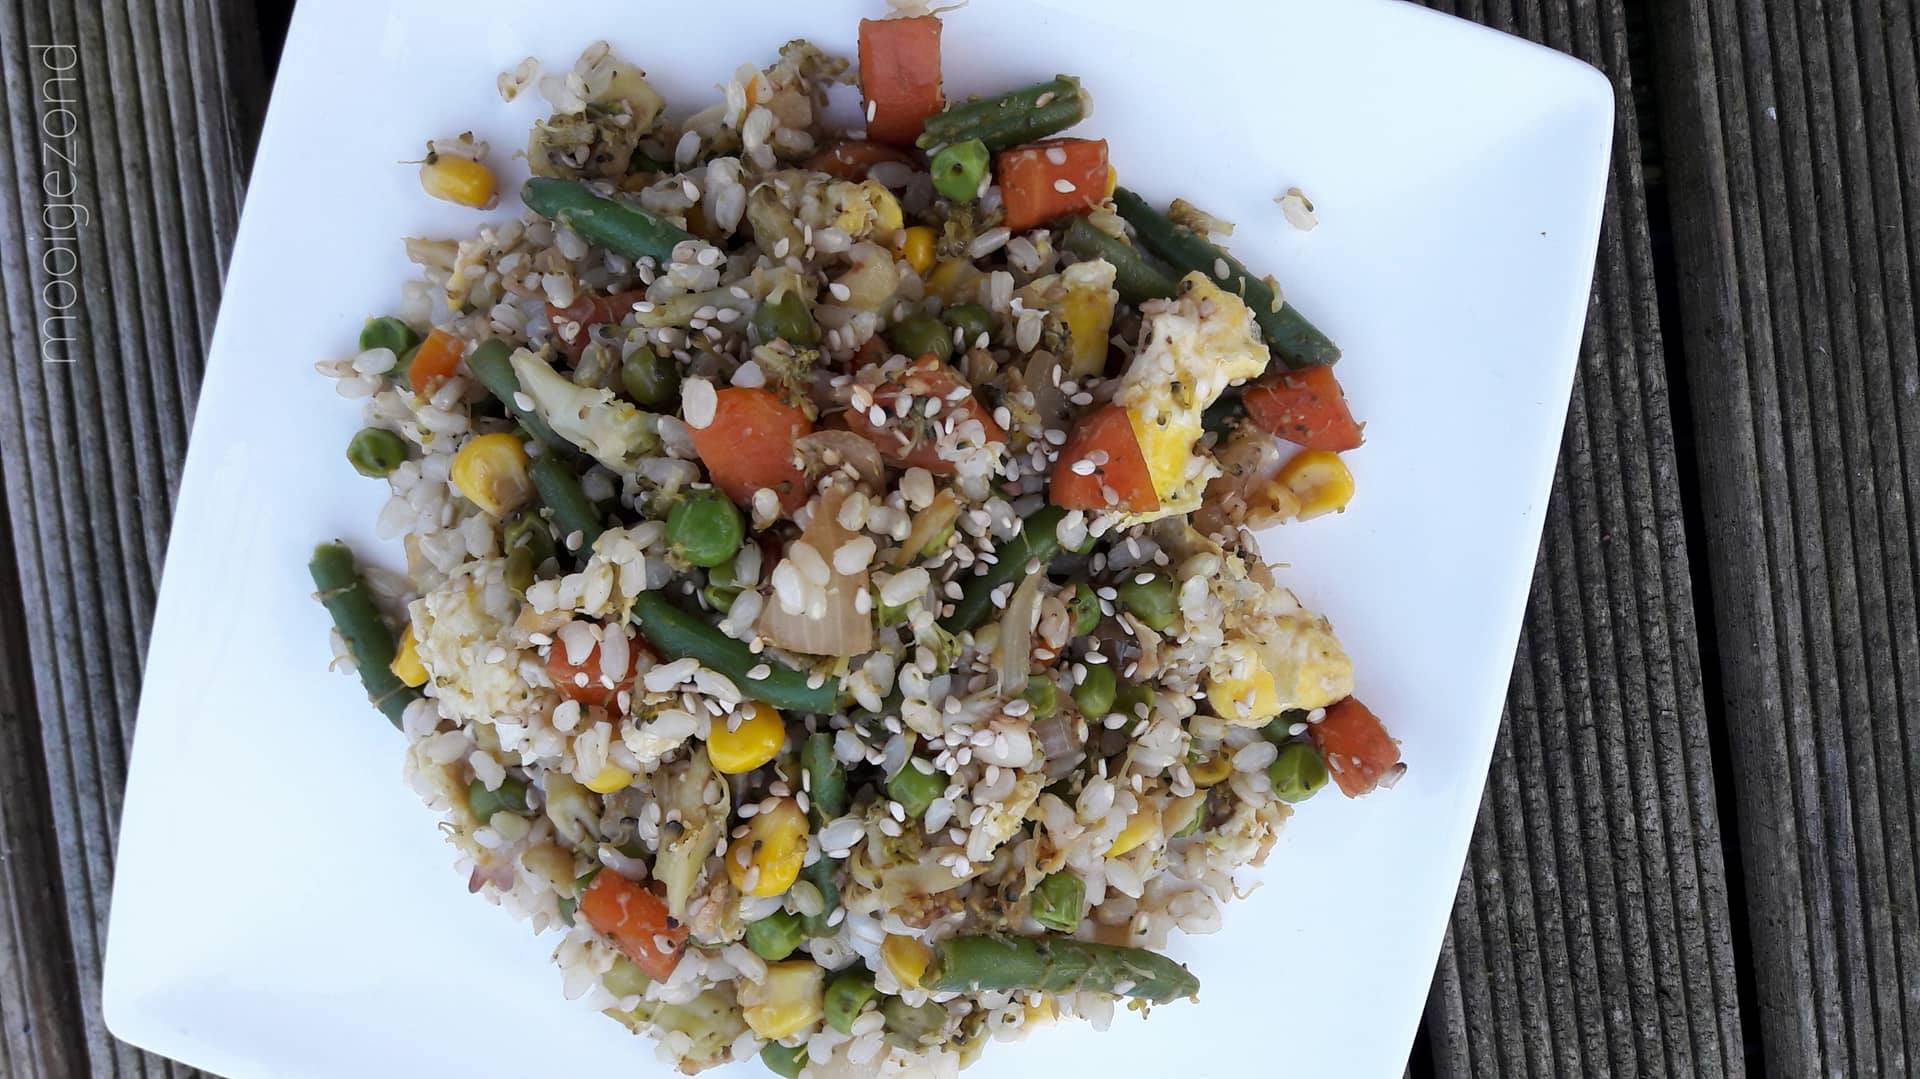 rijstschotel, vegetarisch, groente, vega rijstschotel, sperziebonen, erwten, mais, broccoli, ui